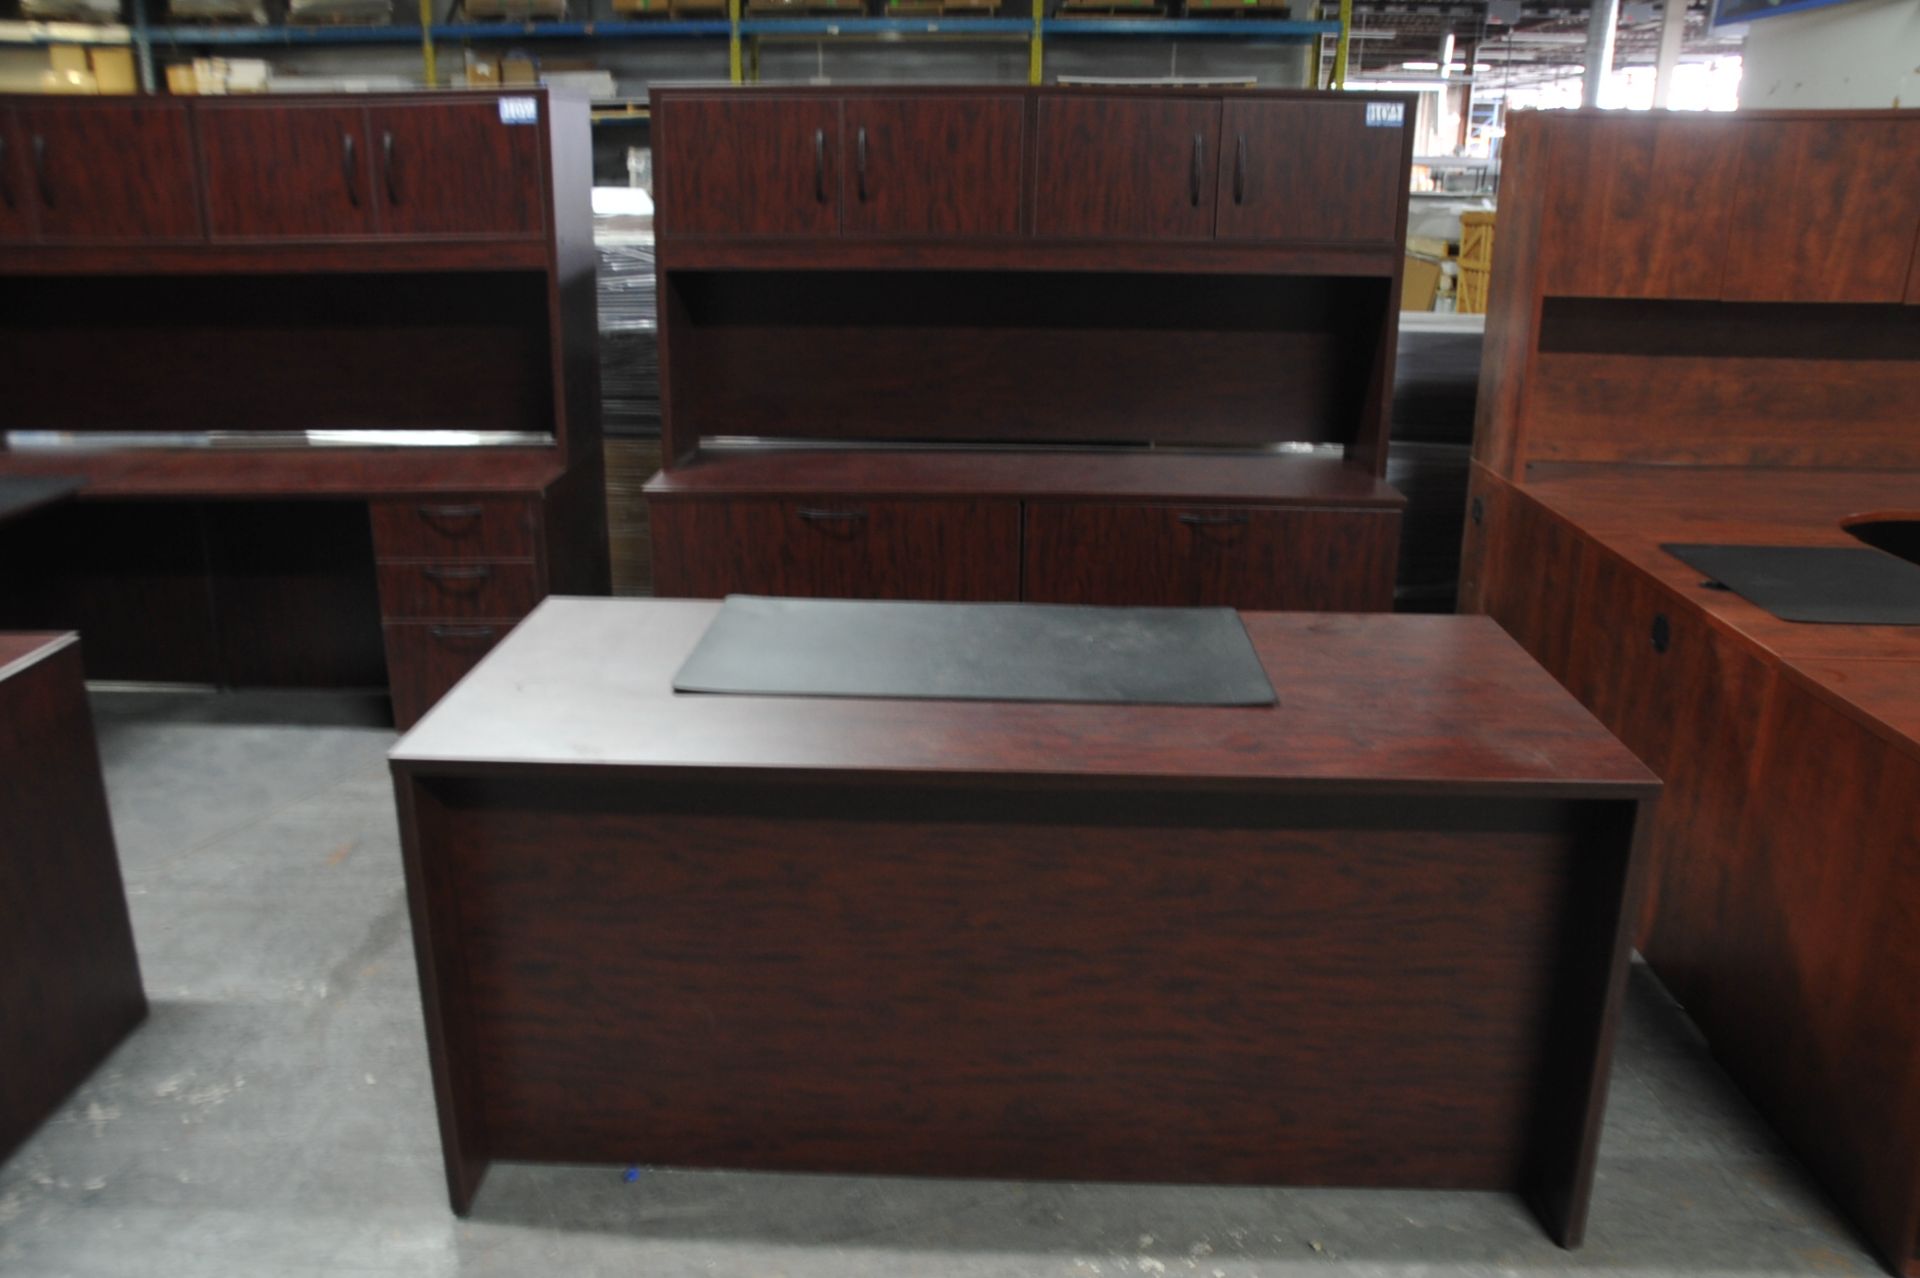 Lot of Office Furniture -  Fixtures & Equipment; Incvludes Desk Credenza w/ Overhead Storage